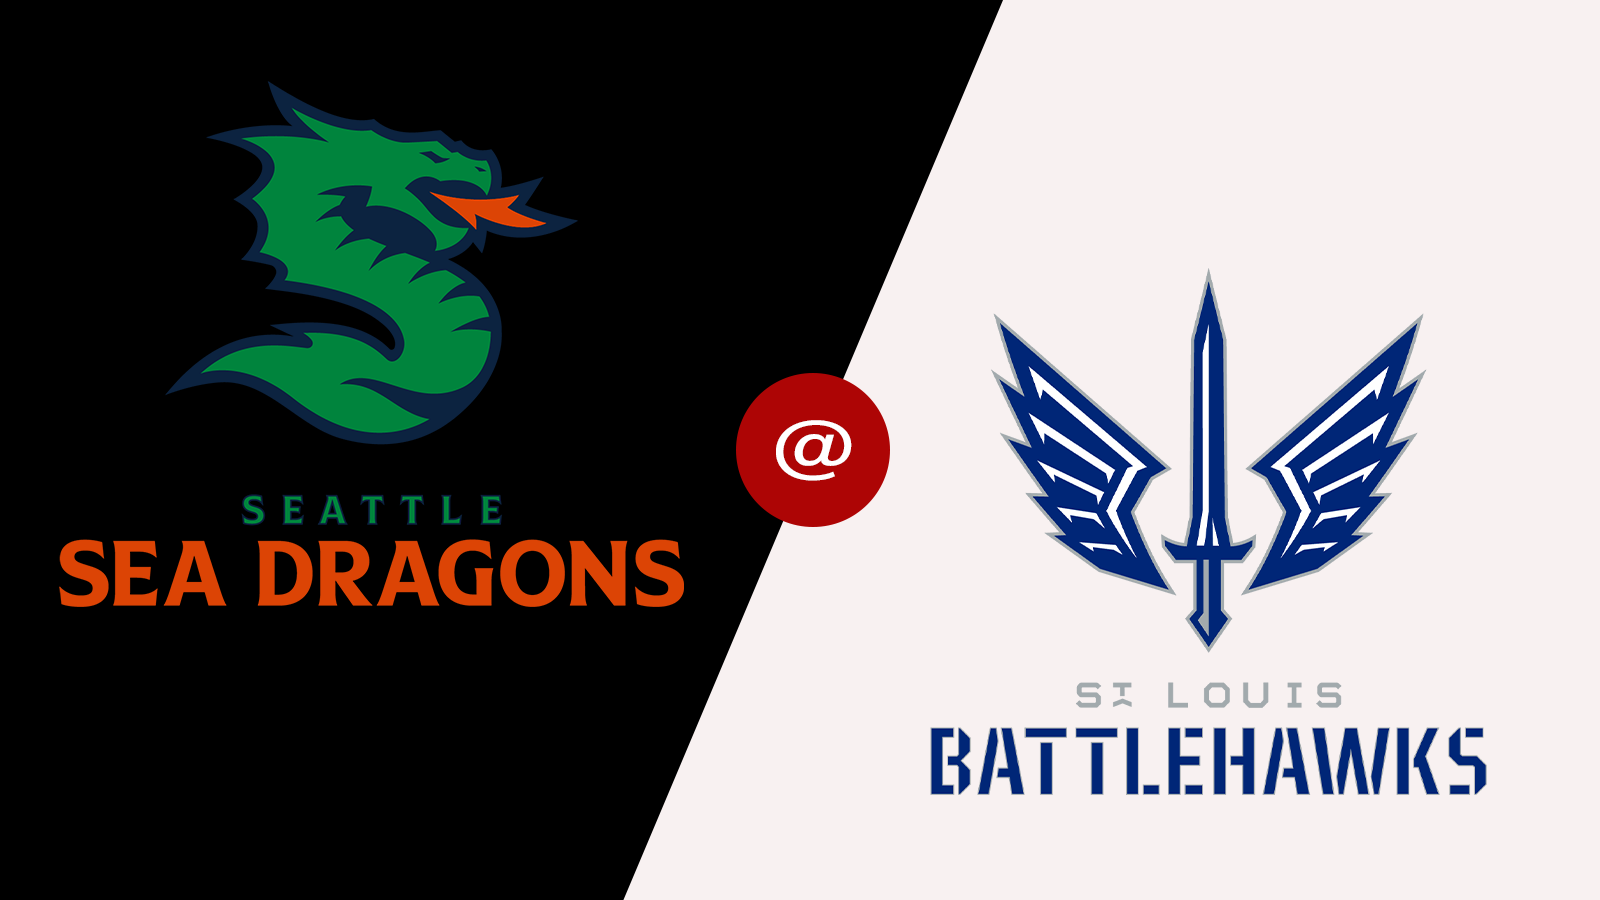 XFL Seattle Sea Dragons vs. Battlehawks - The Ticket